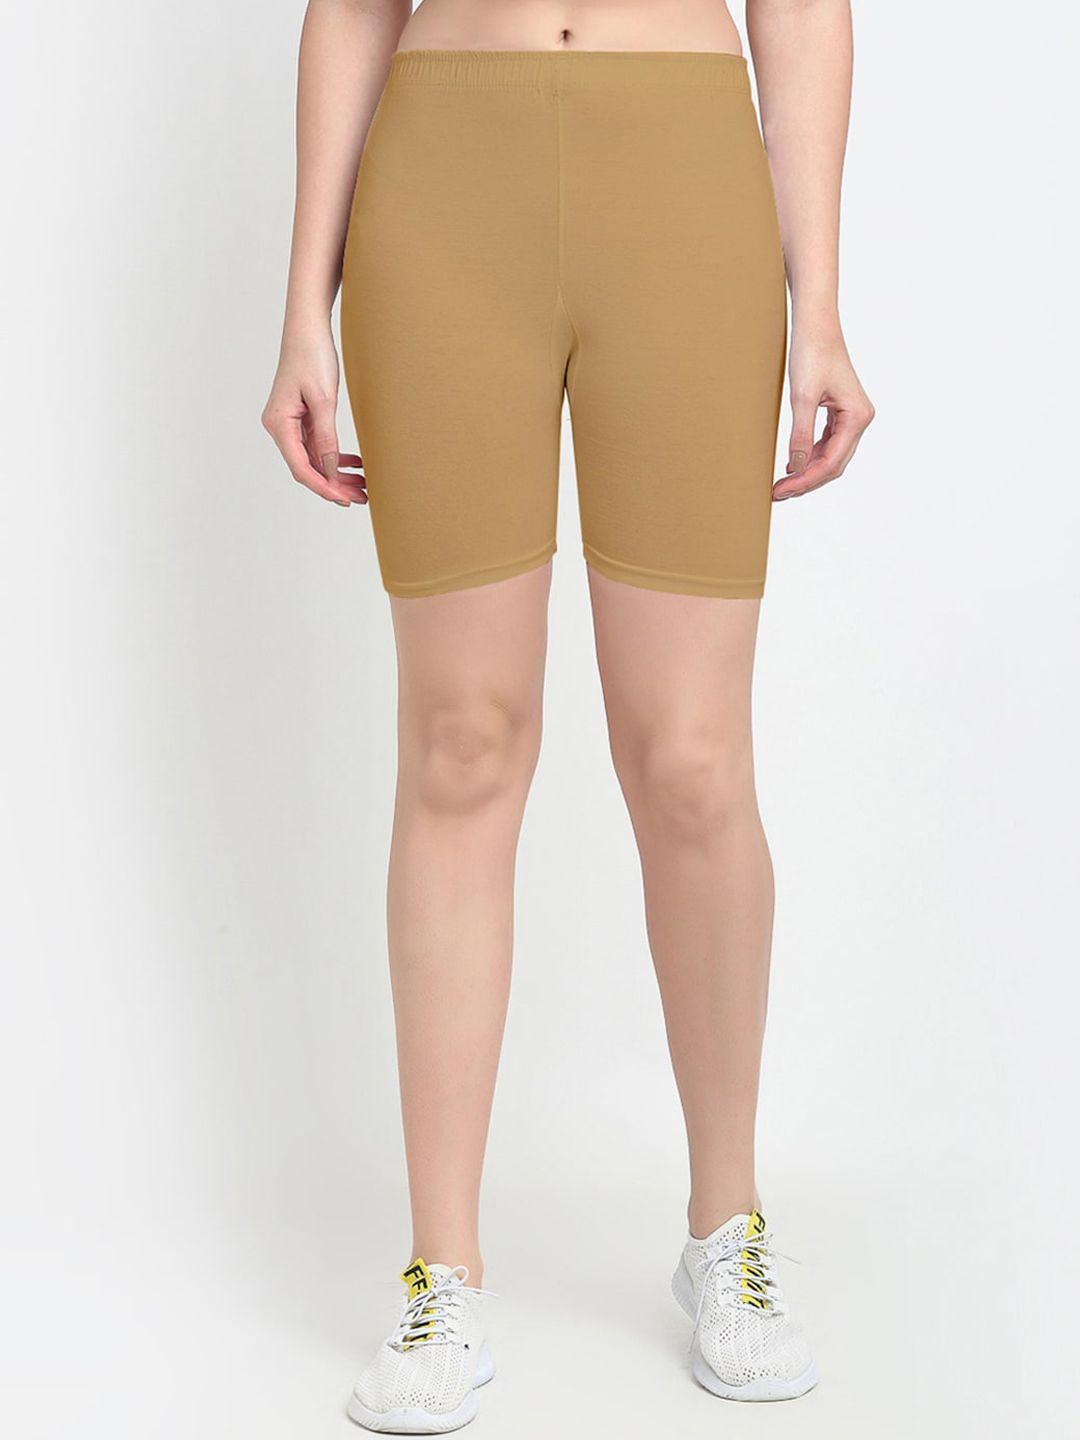 gracit-women-beige-biker-shorts